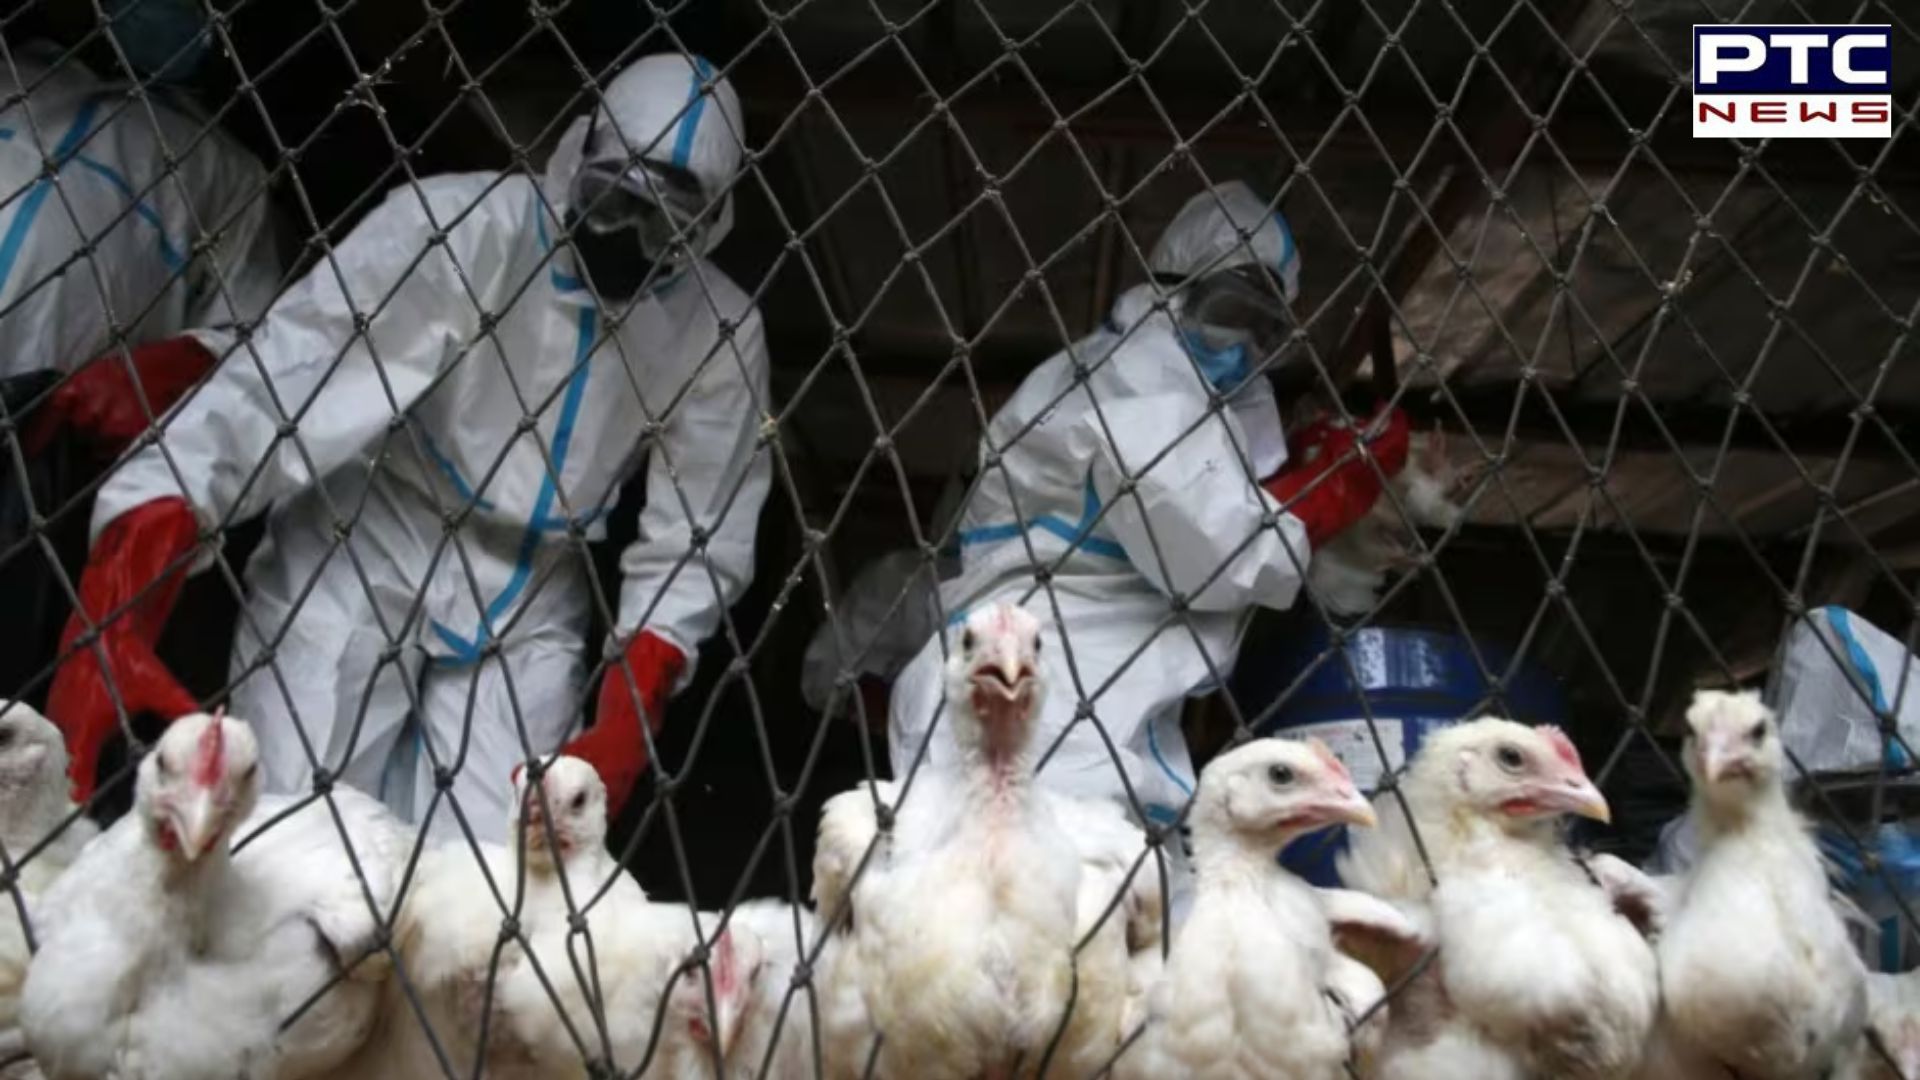 Experts warns: H5N1 bird flu outbreak poses risk far exceeding Covid pandemic